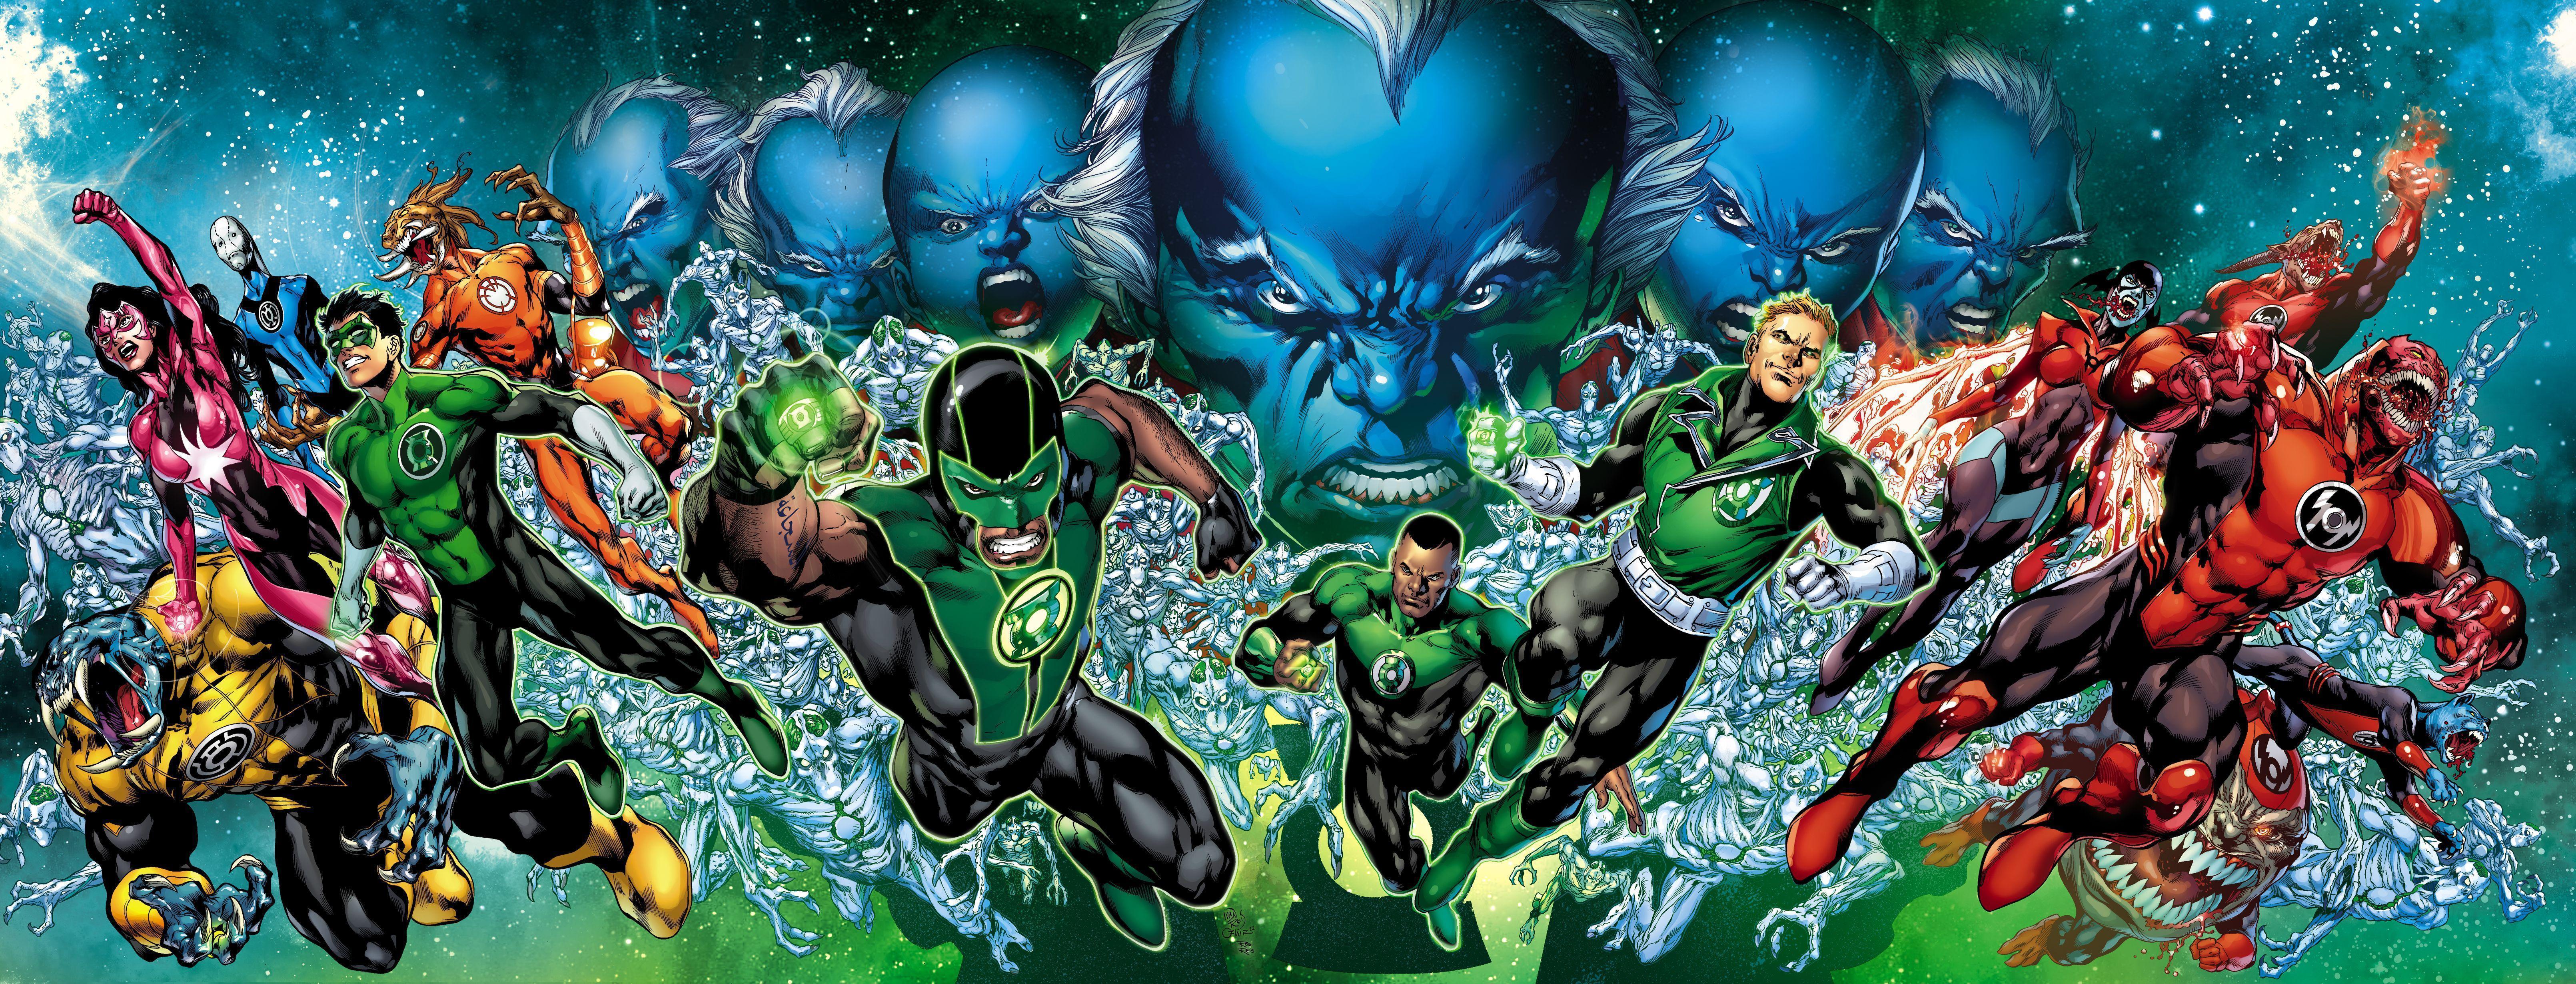 Green Lantern 4k Ultra HD Wallpaper